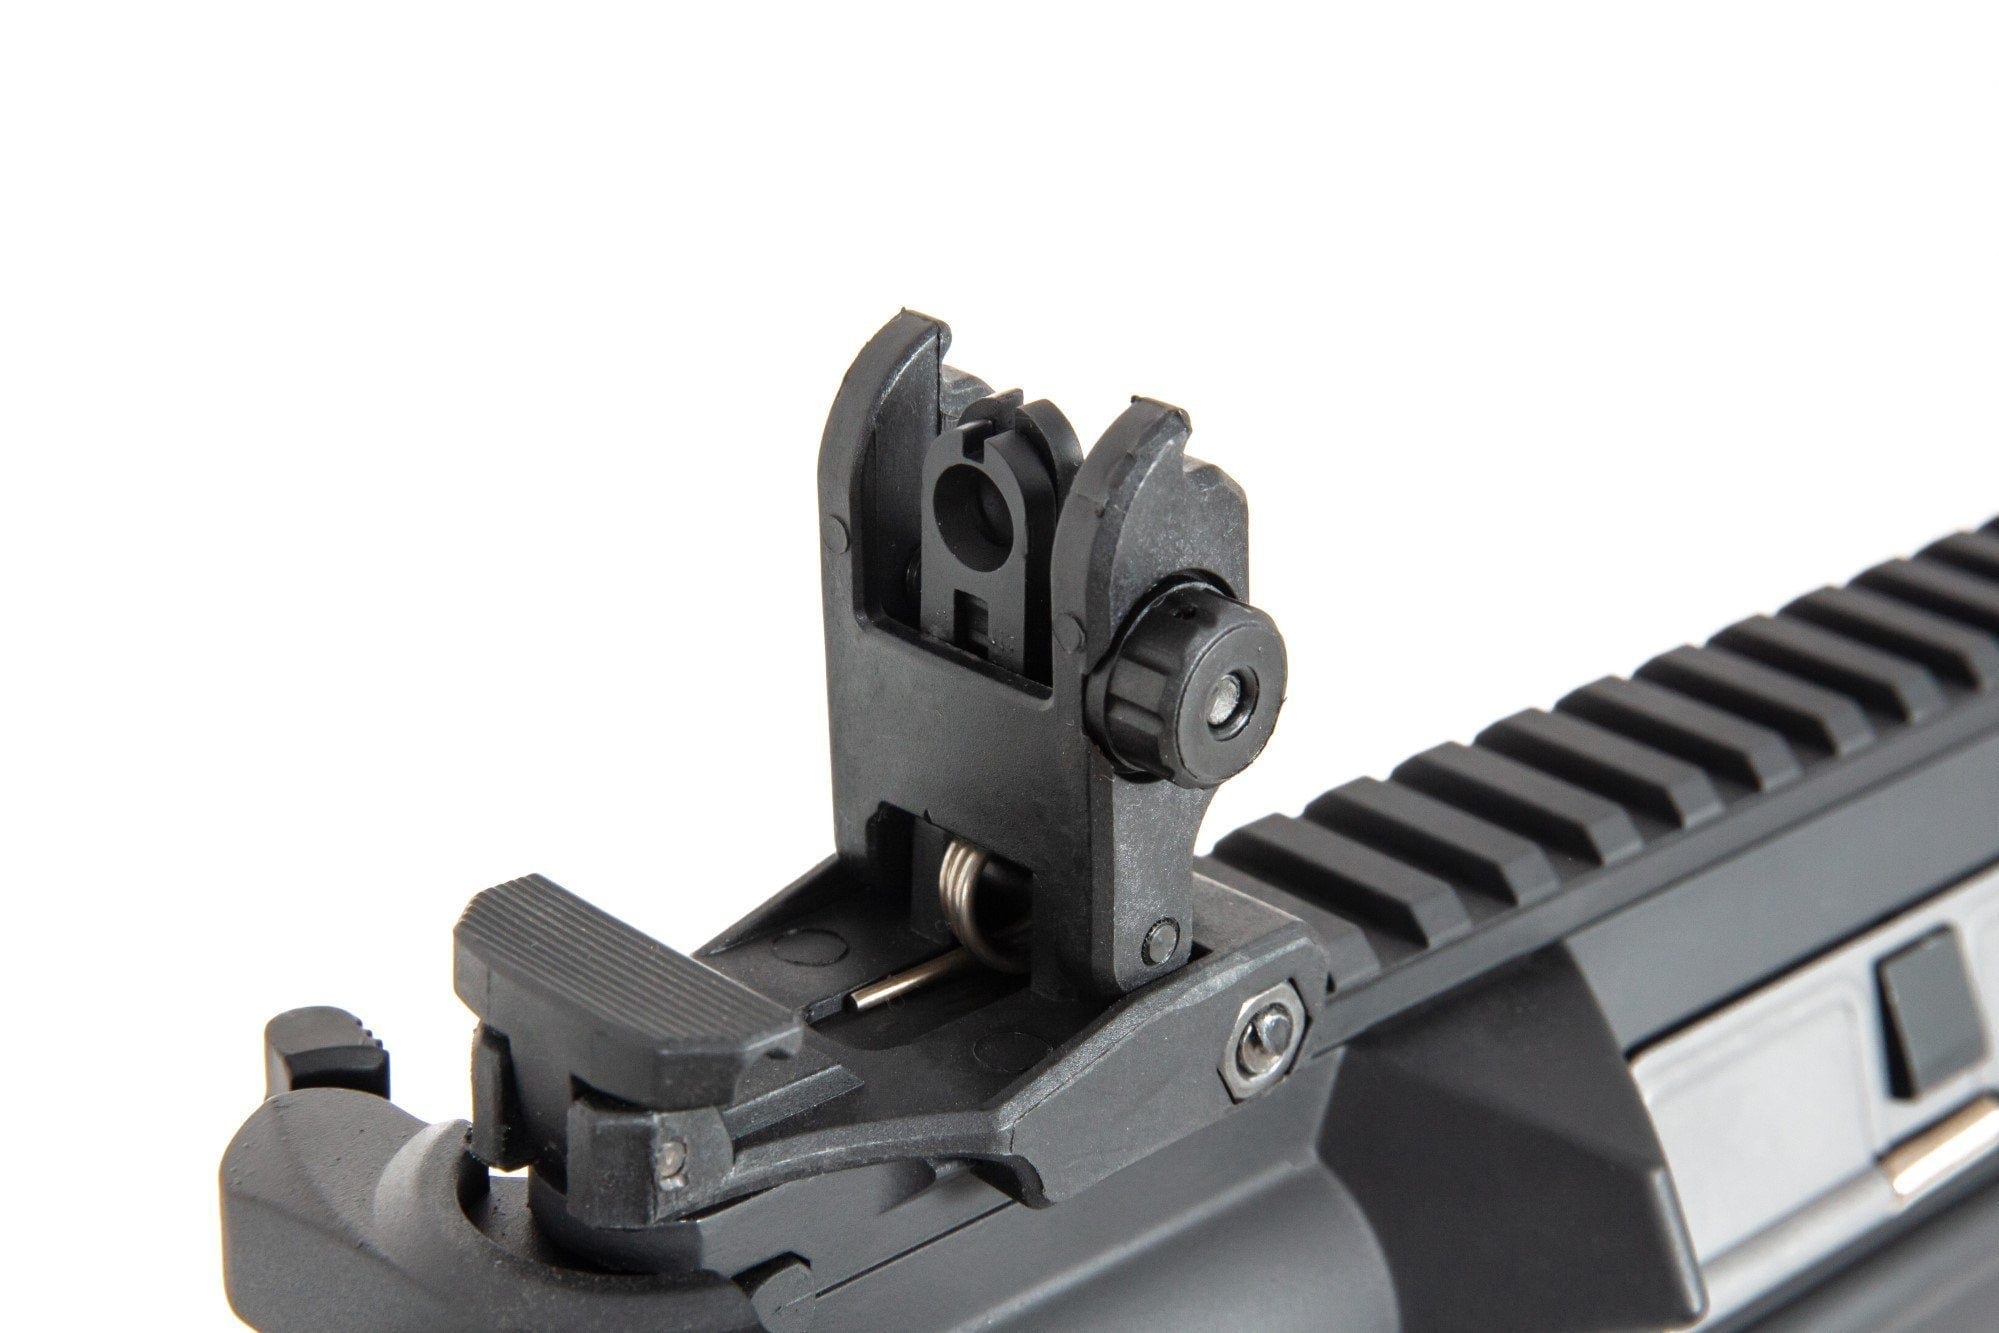 C12 SA-CORE-X ™ ASR ™ Carbine Replica - Black by Specna Arms on Airsoft Mania Europe